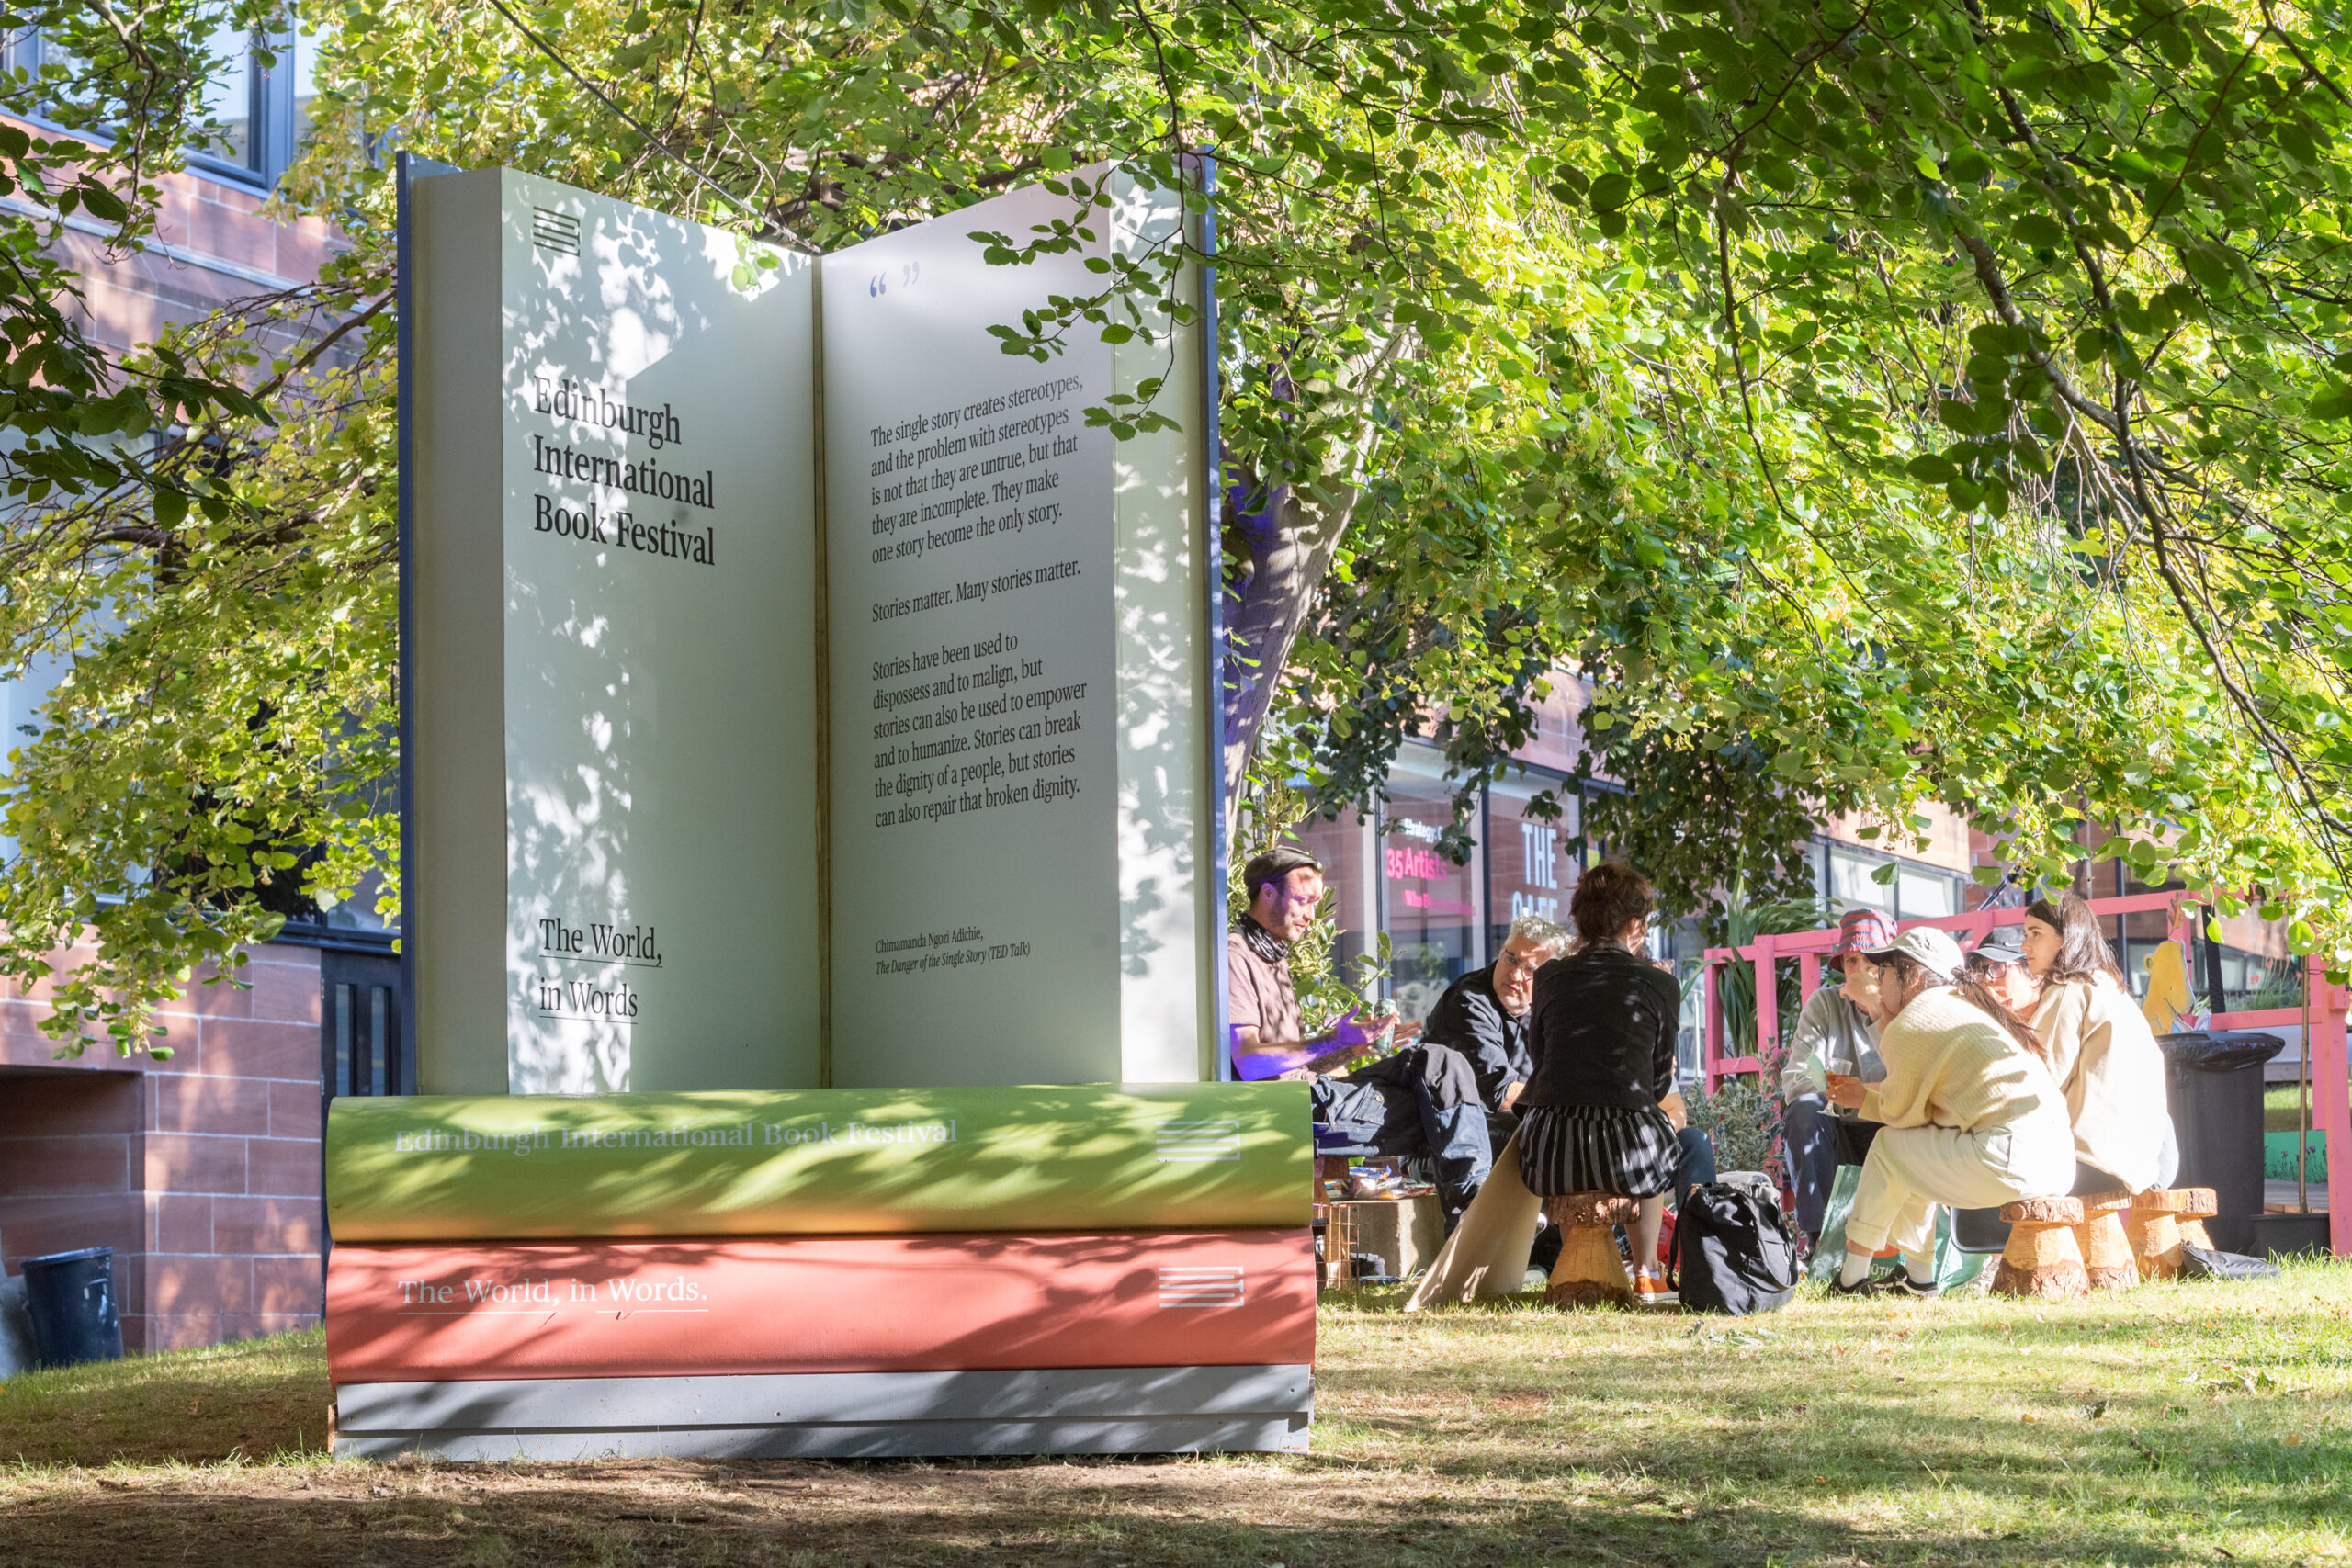 The Edinburgh International Book Festival announces its 40 years programme